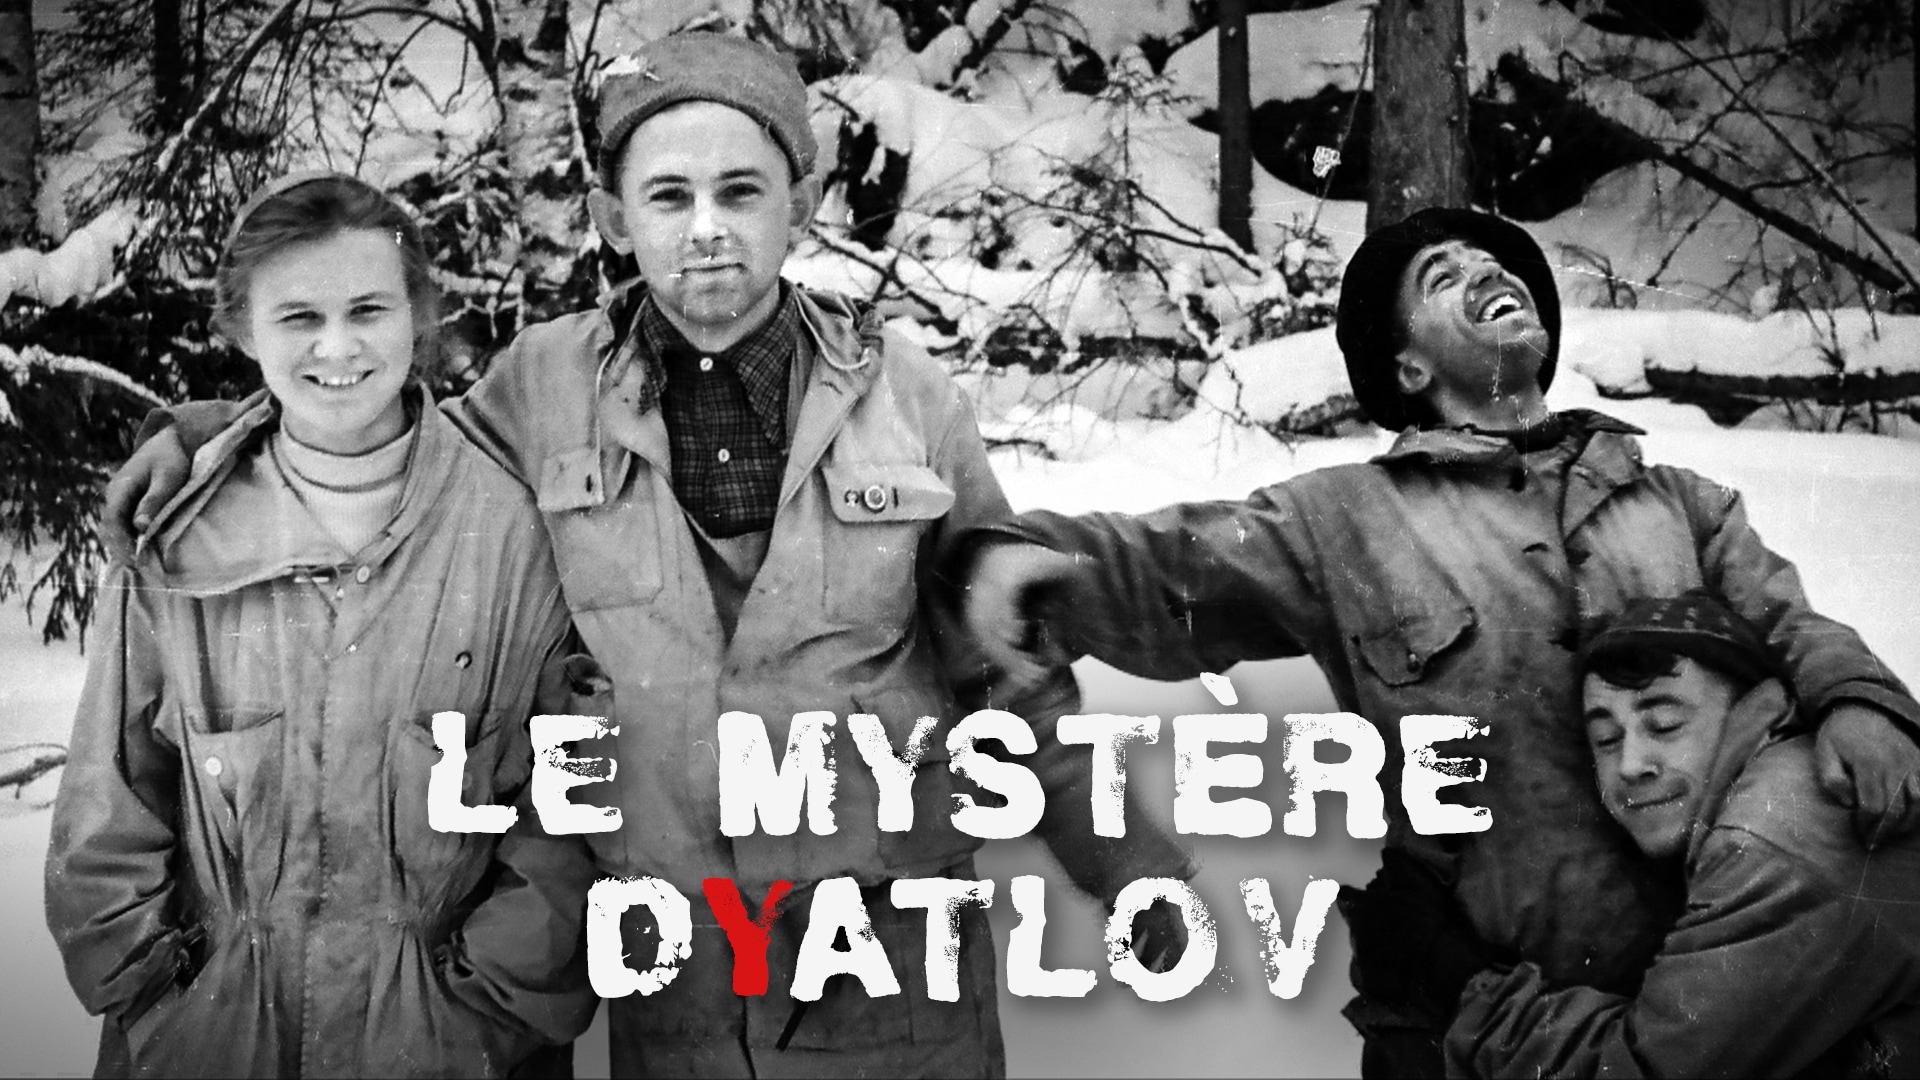 Le mystère Dyatlov